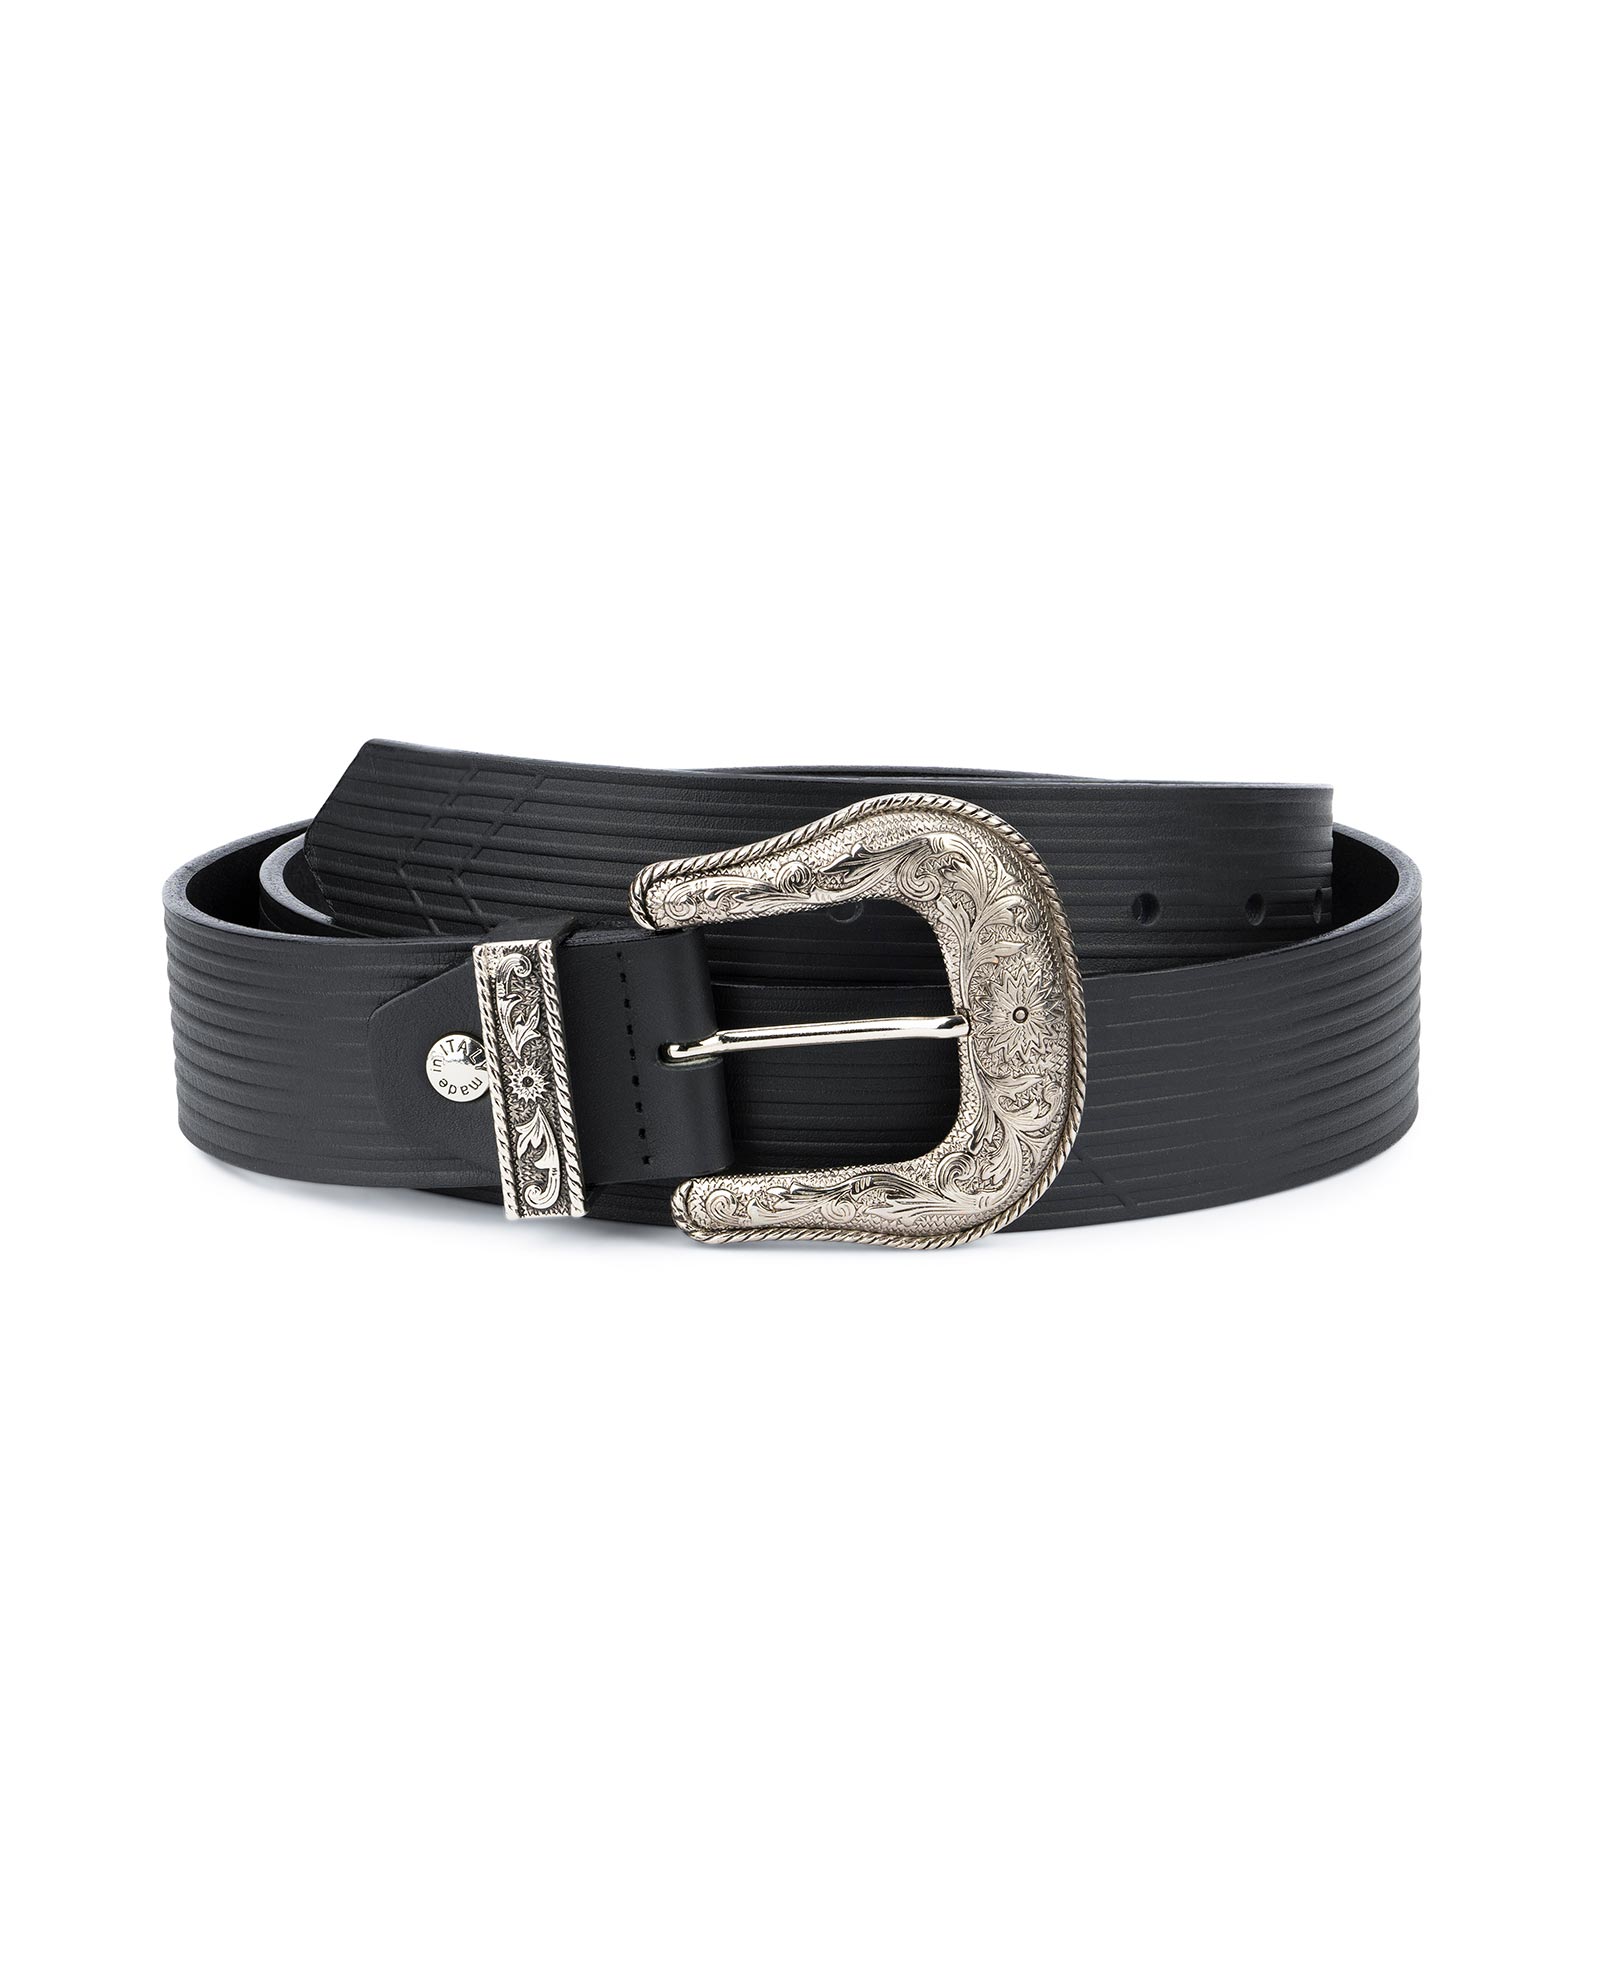 Buy Black Western Belt | Wide Embossed Leather | LeatherBeltsOnline